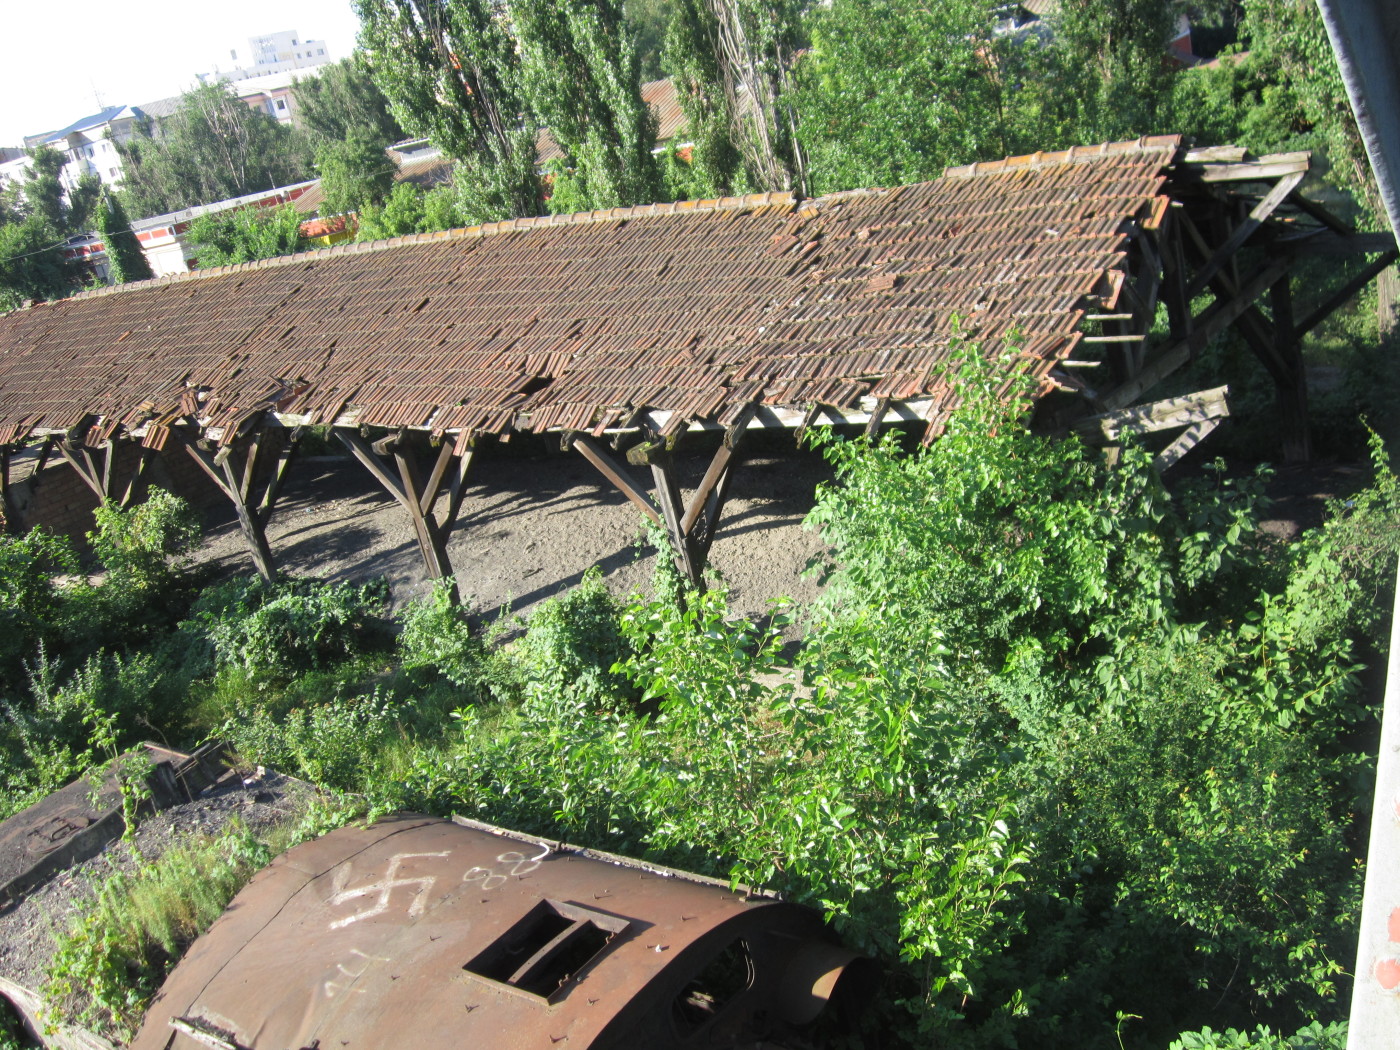 Abandoned railway facilities